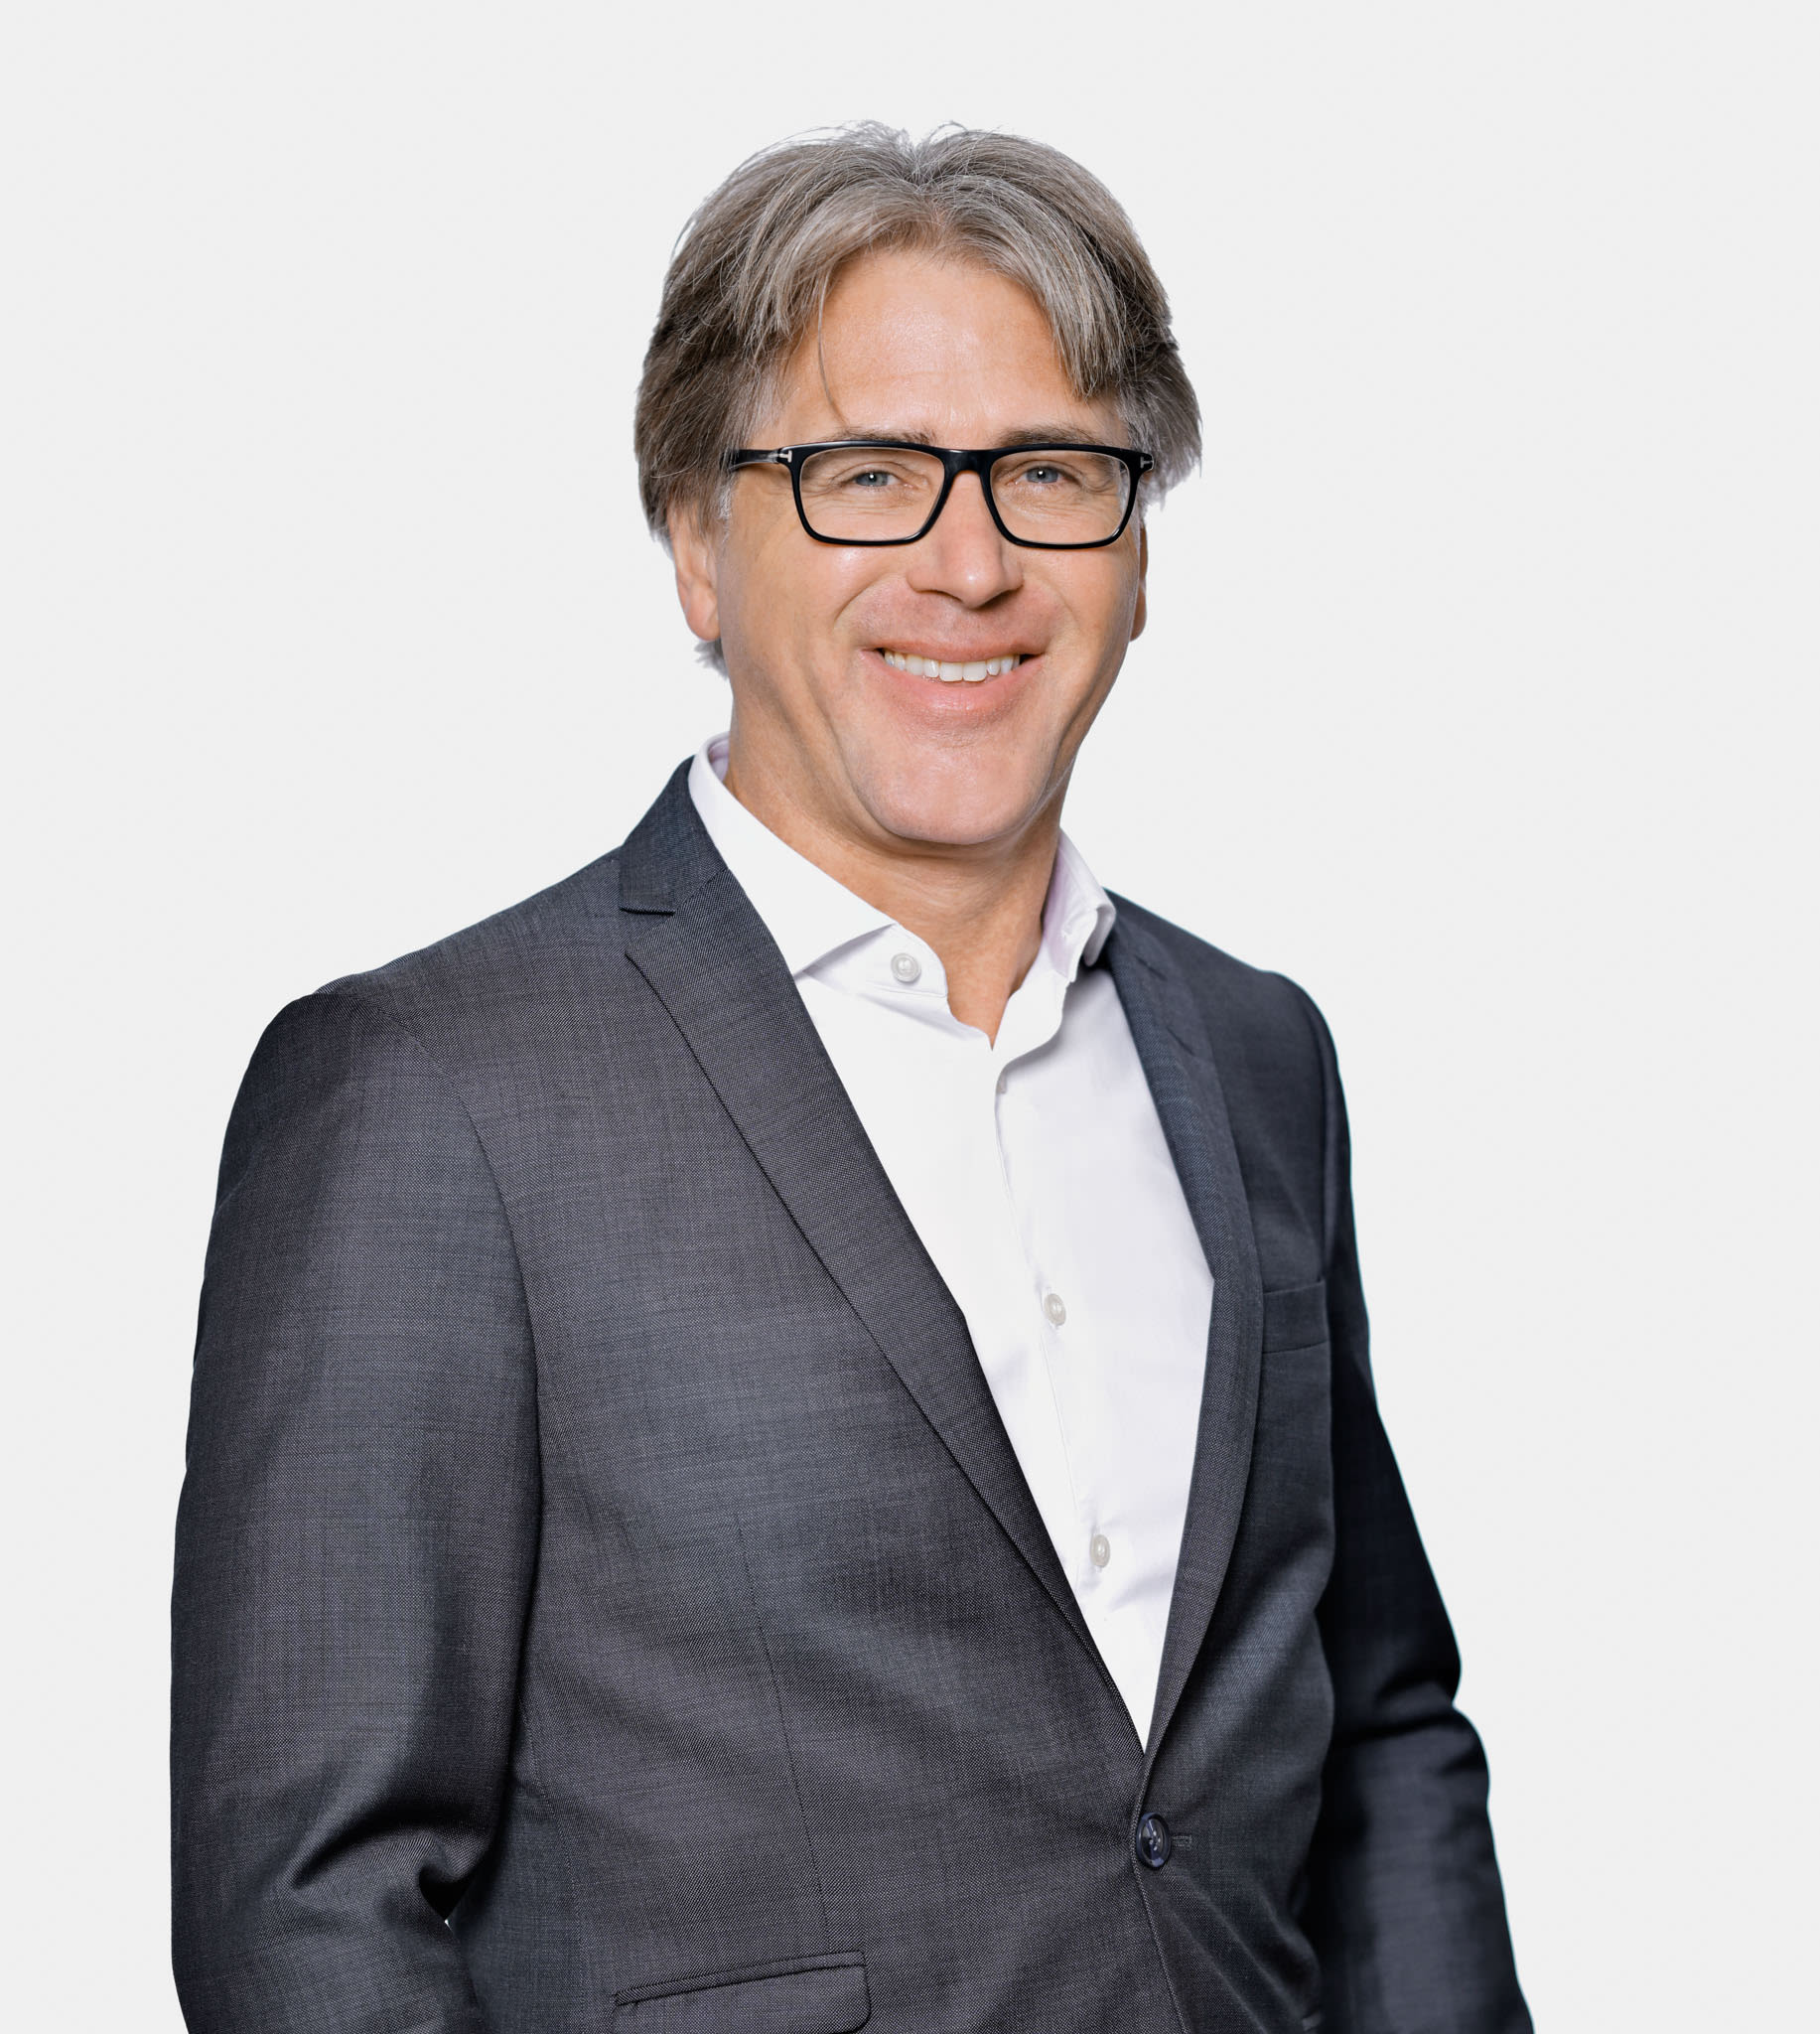 Martin Scherrer, NDT Global Senior Vice President - Global Sales